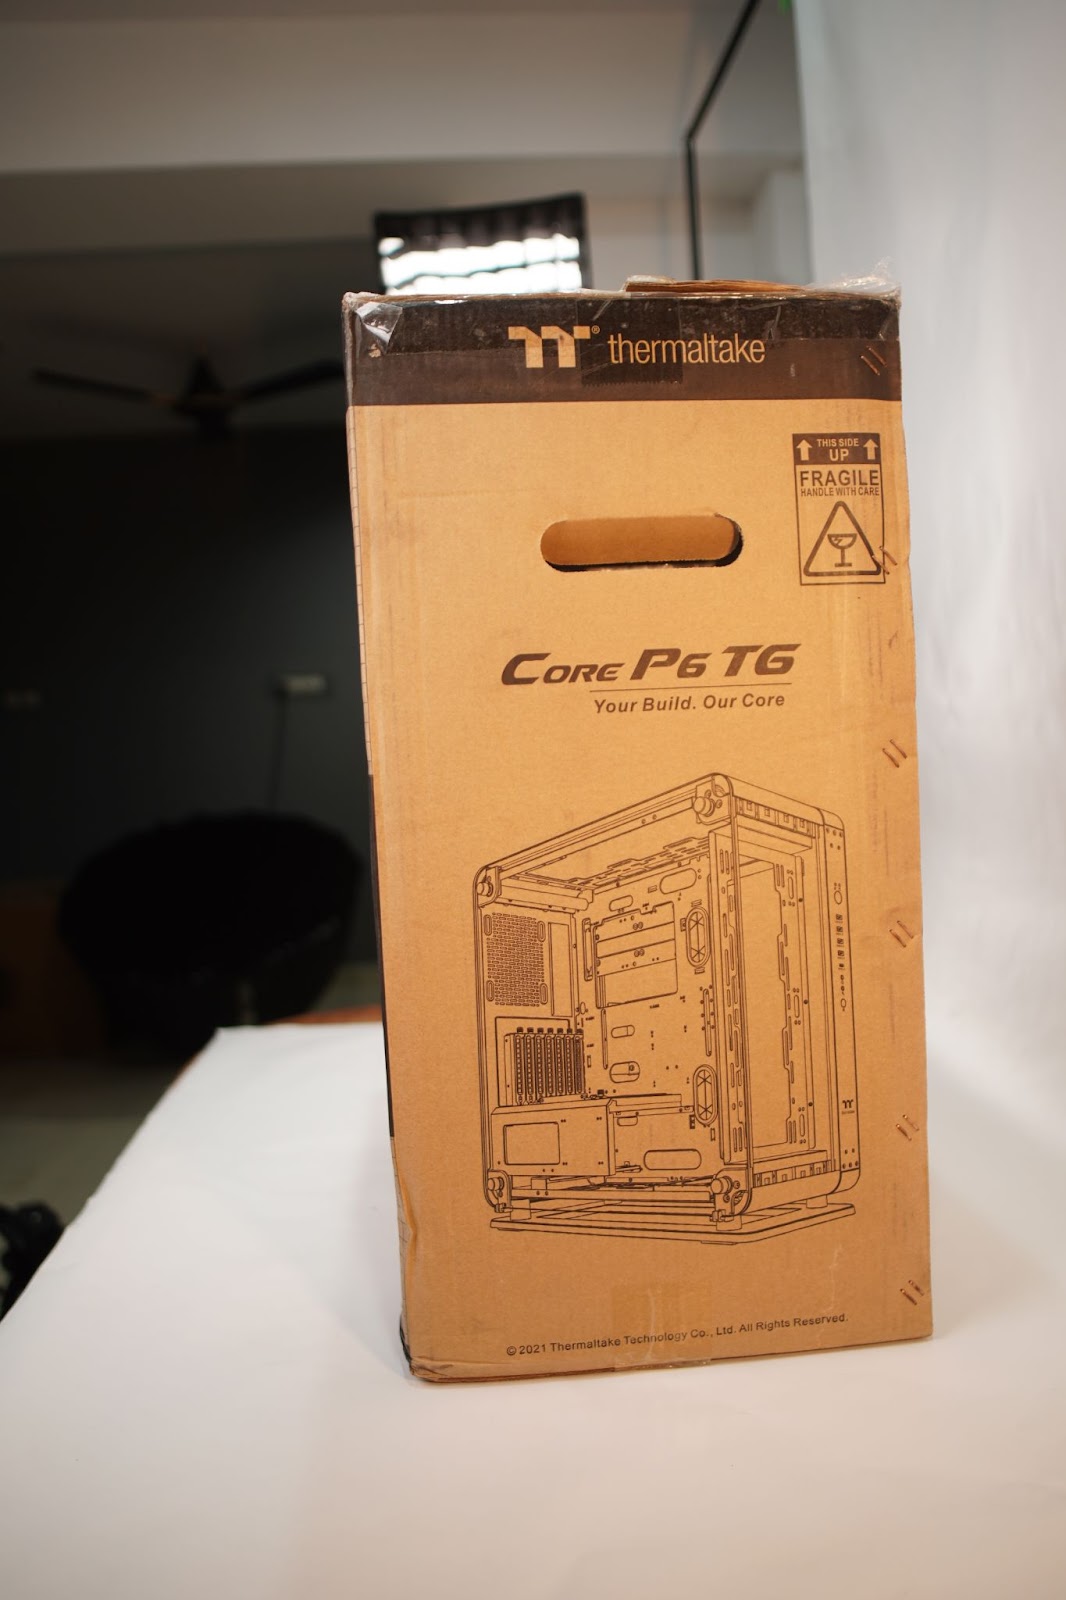 Thermaltake Core P6 packaging